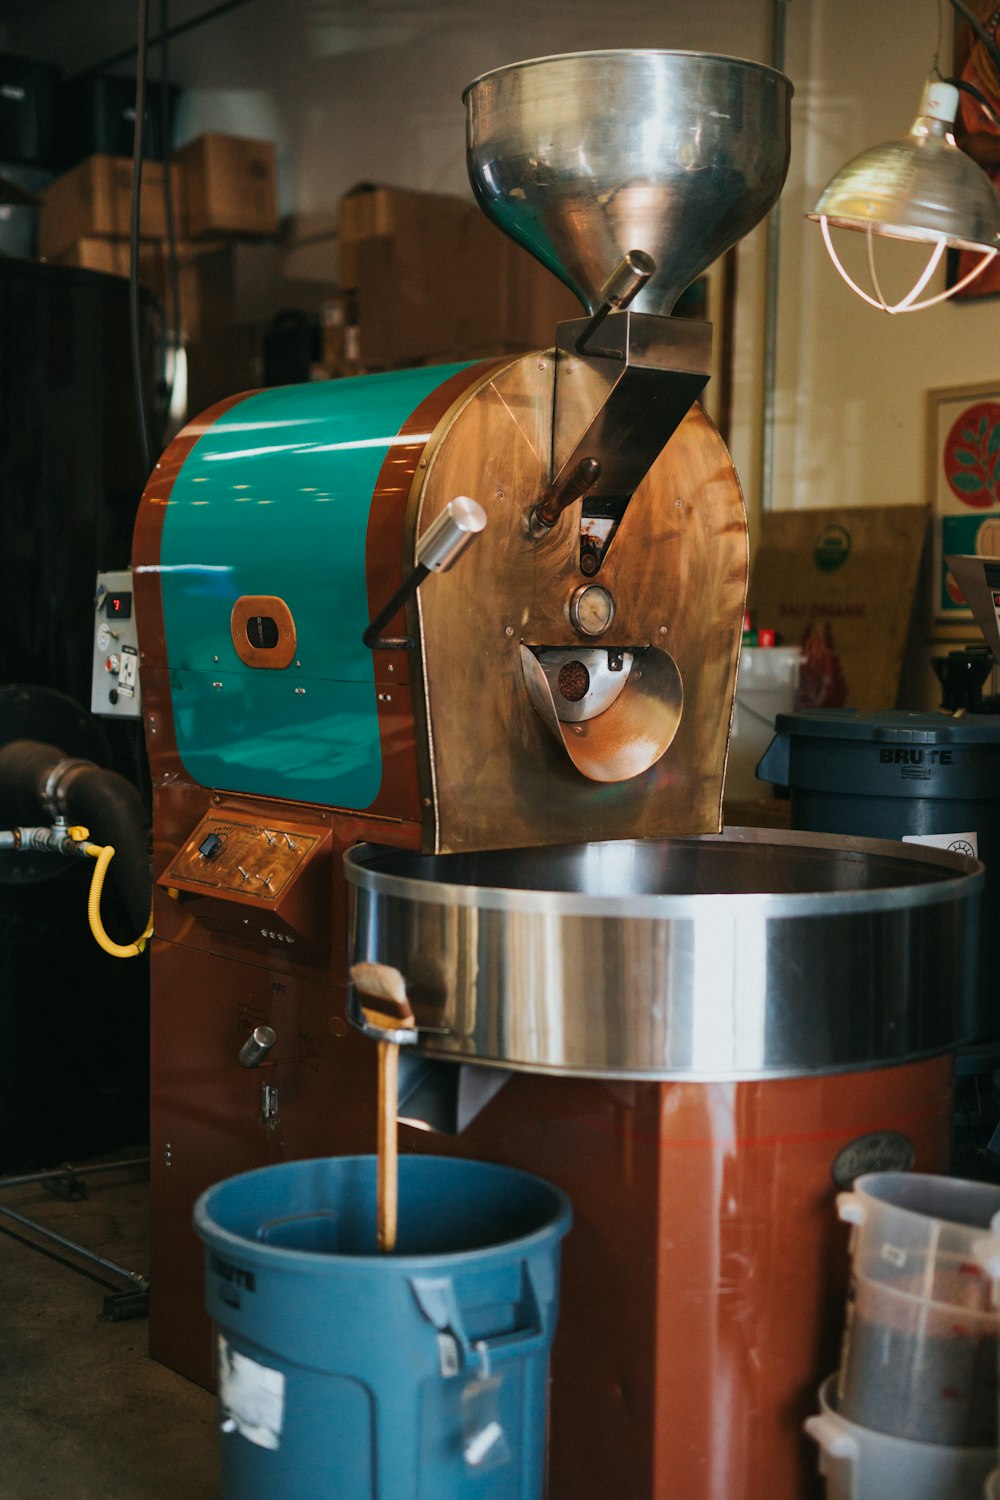 blue plastic pitcher near coffee maker